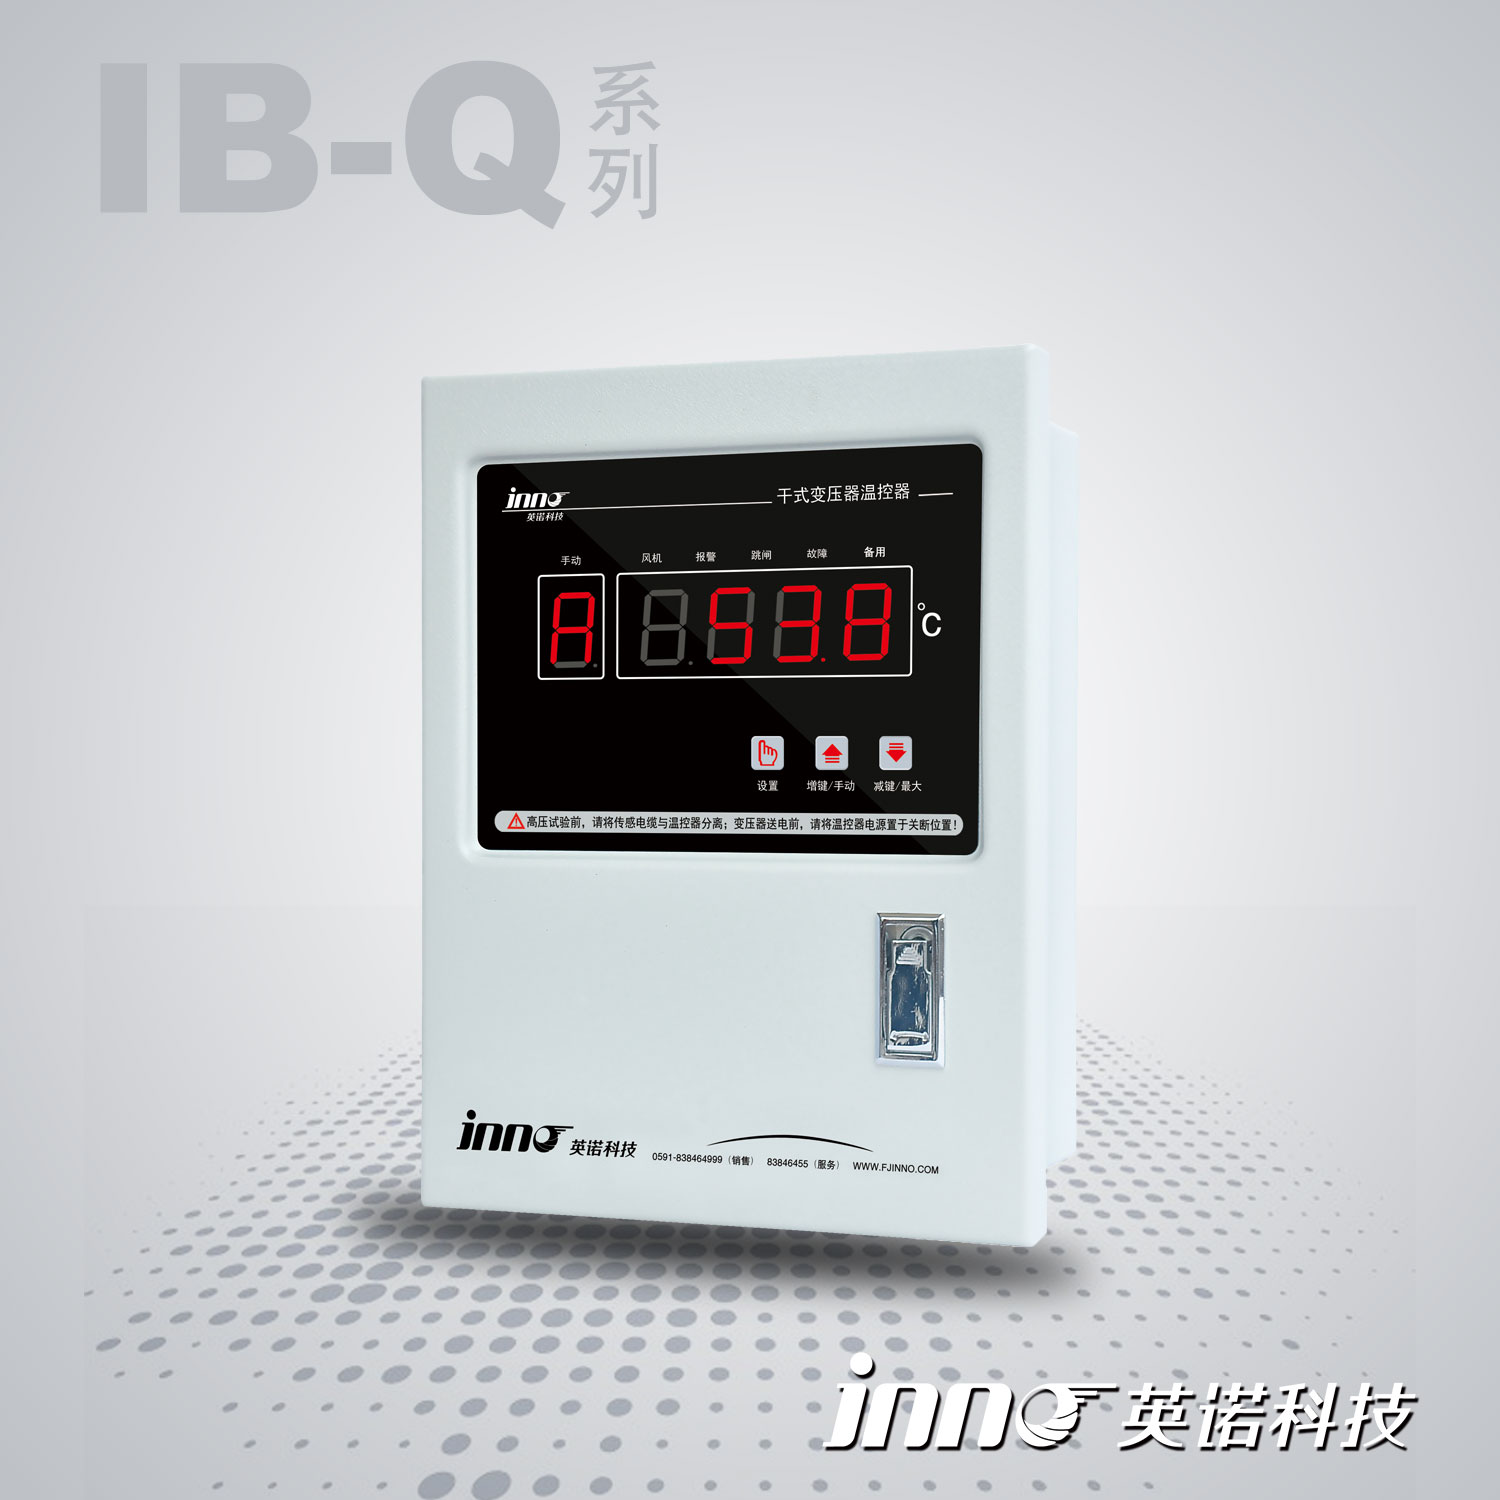 IB-Q201系列